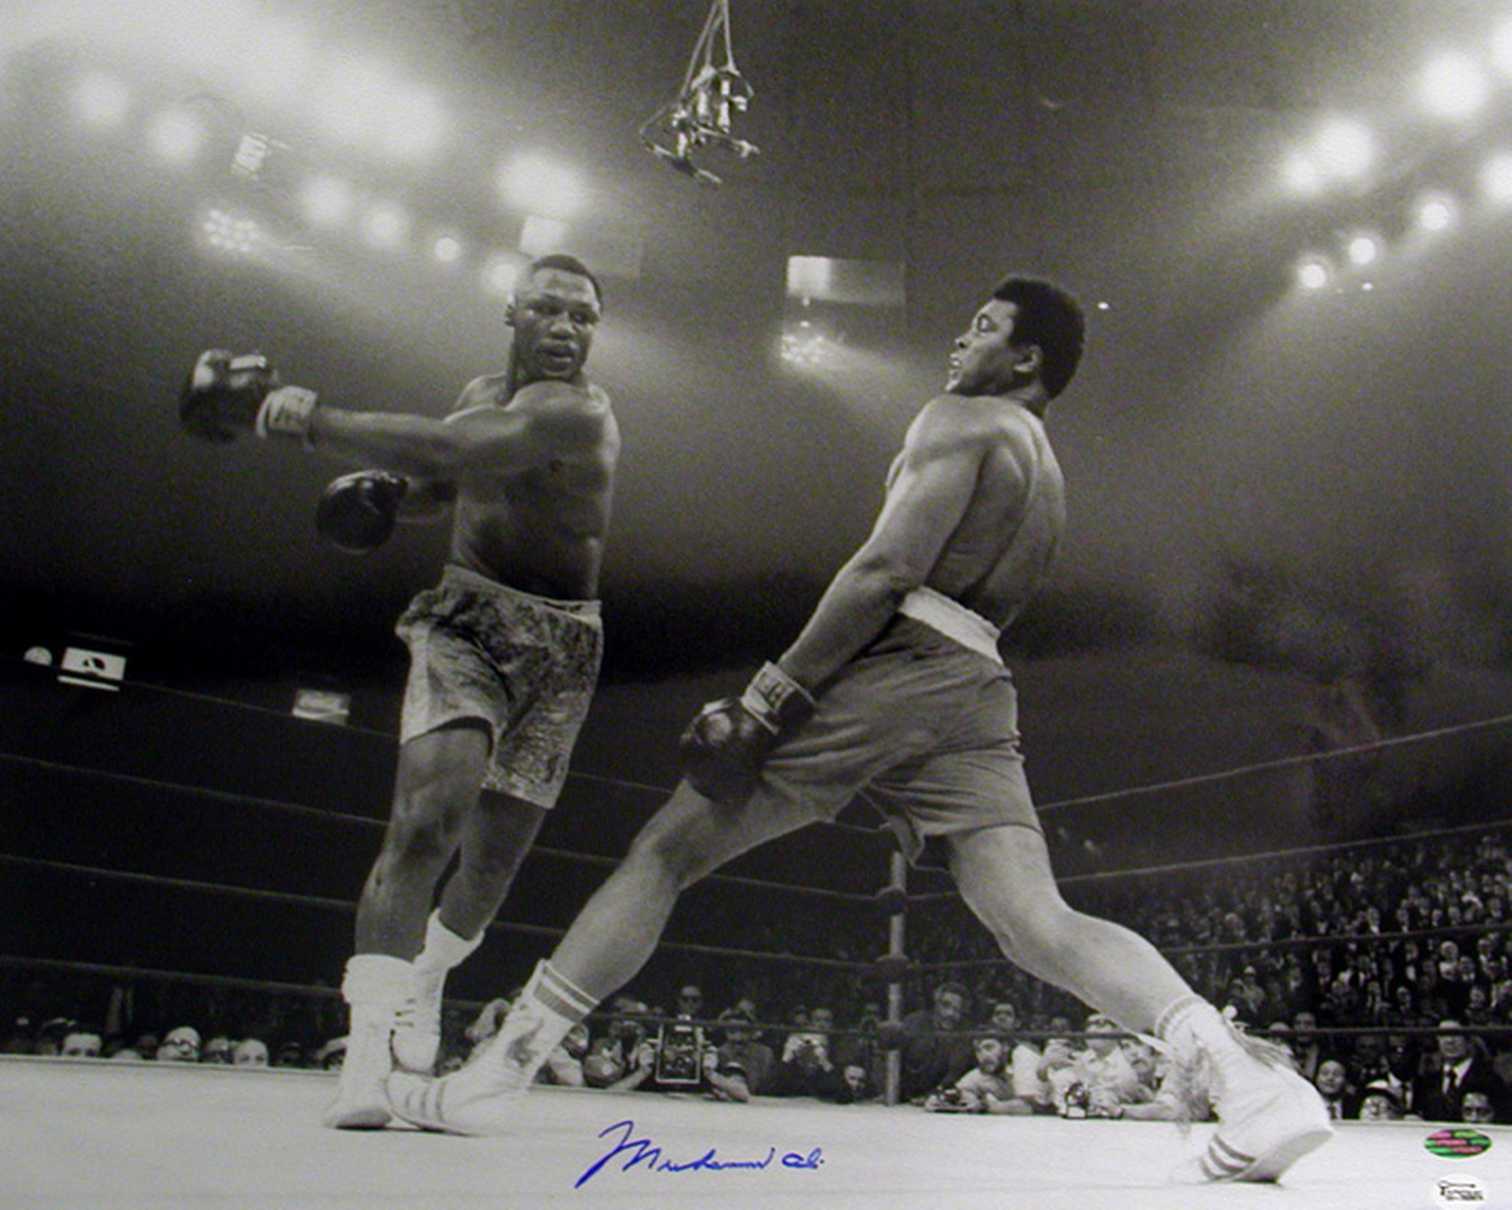 Muhammad Ali vs. Joe Frazier II Download HD Wallpaper and Free Image